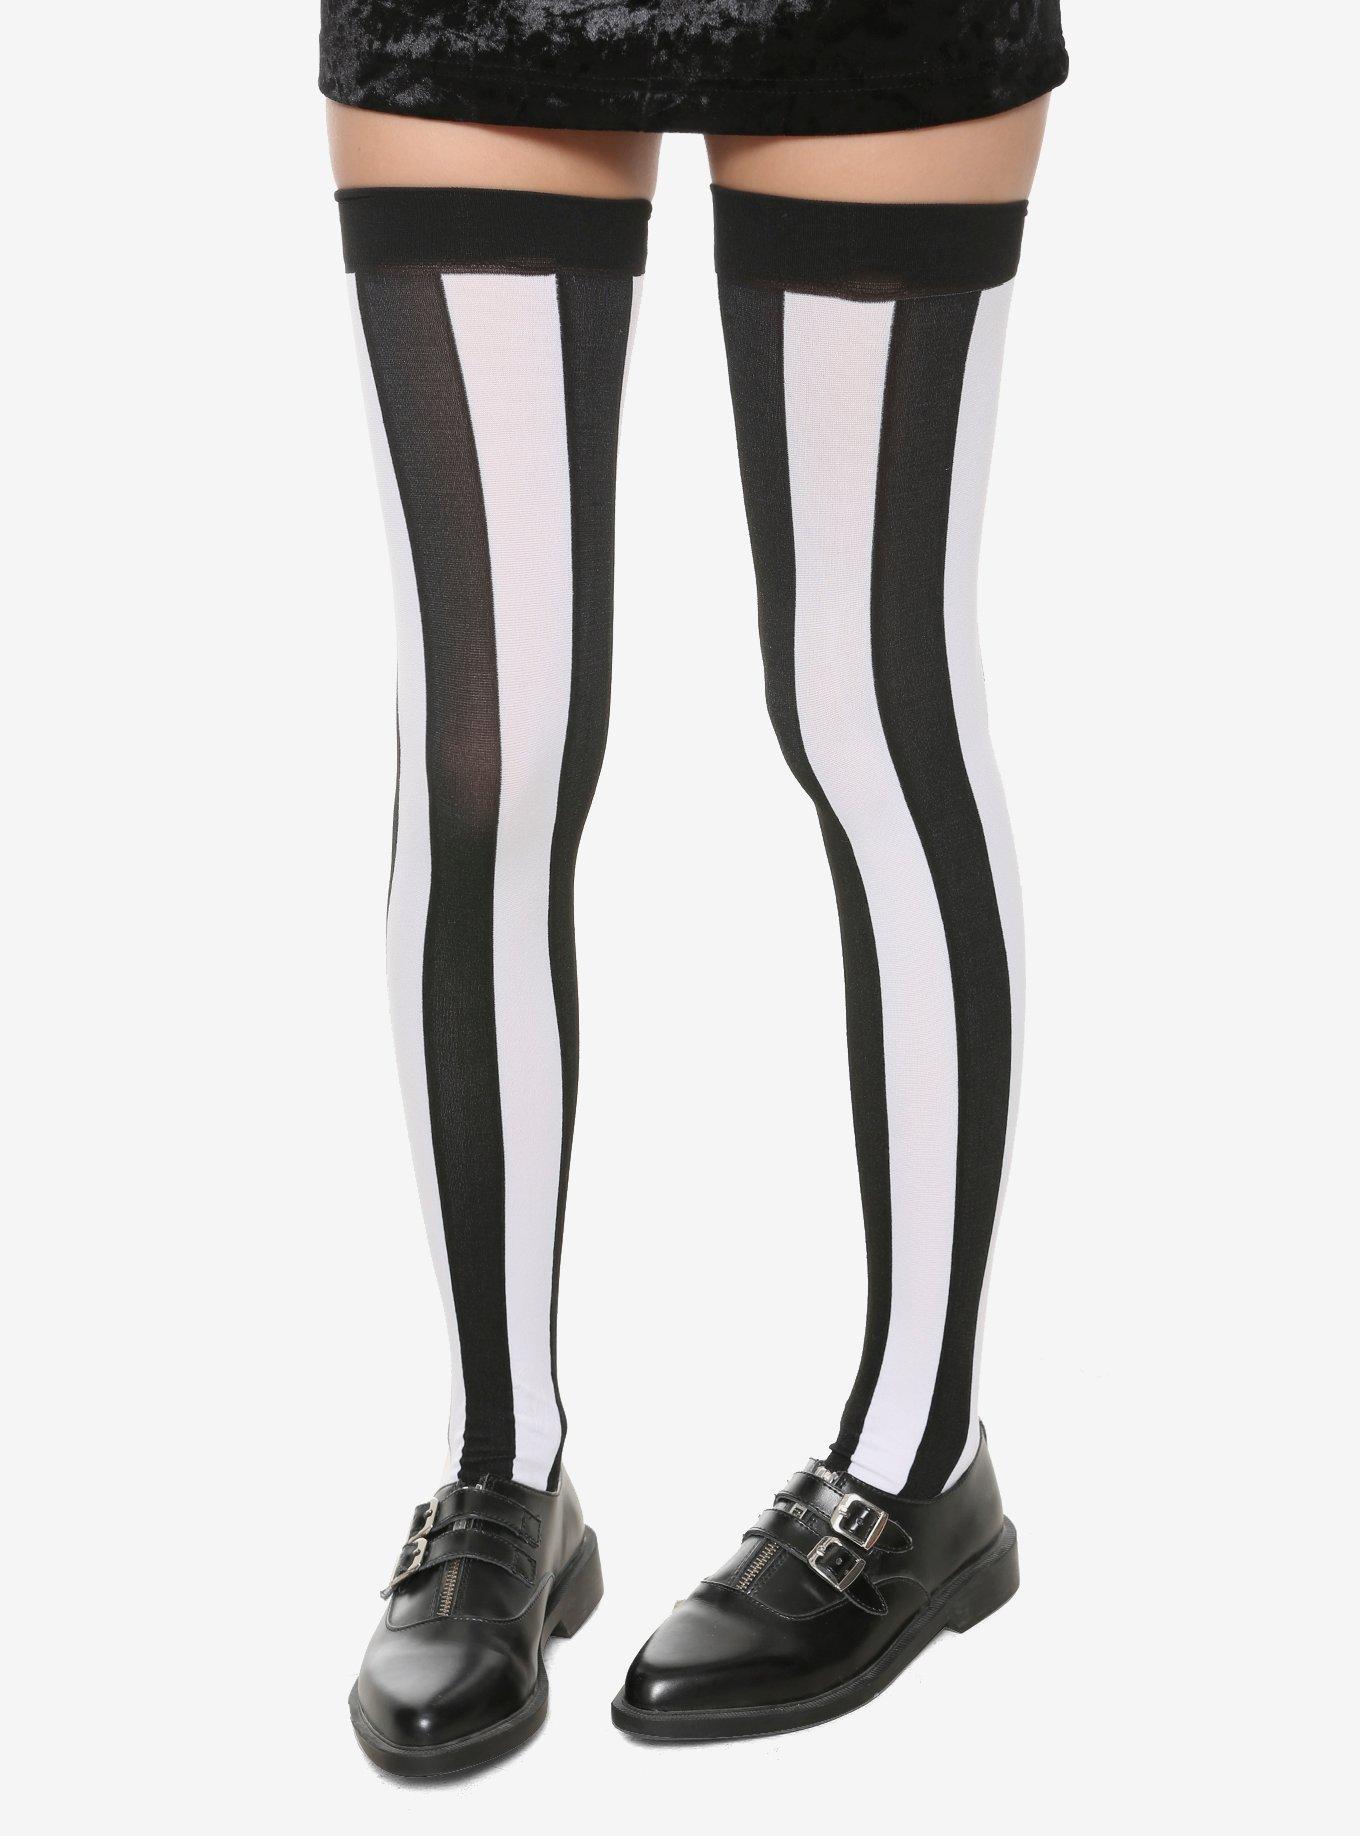 Black & White Vertical Striped Thigh Highs, , hi-res